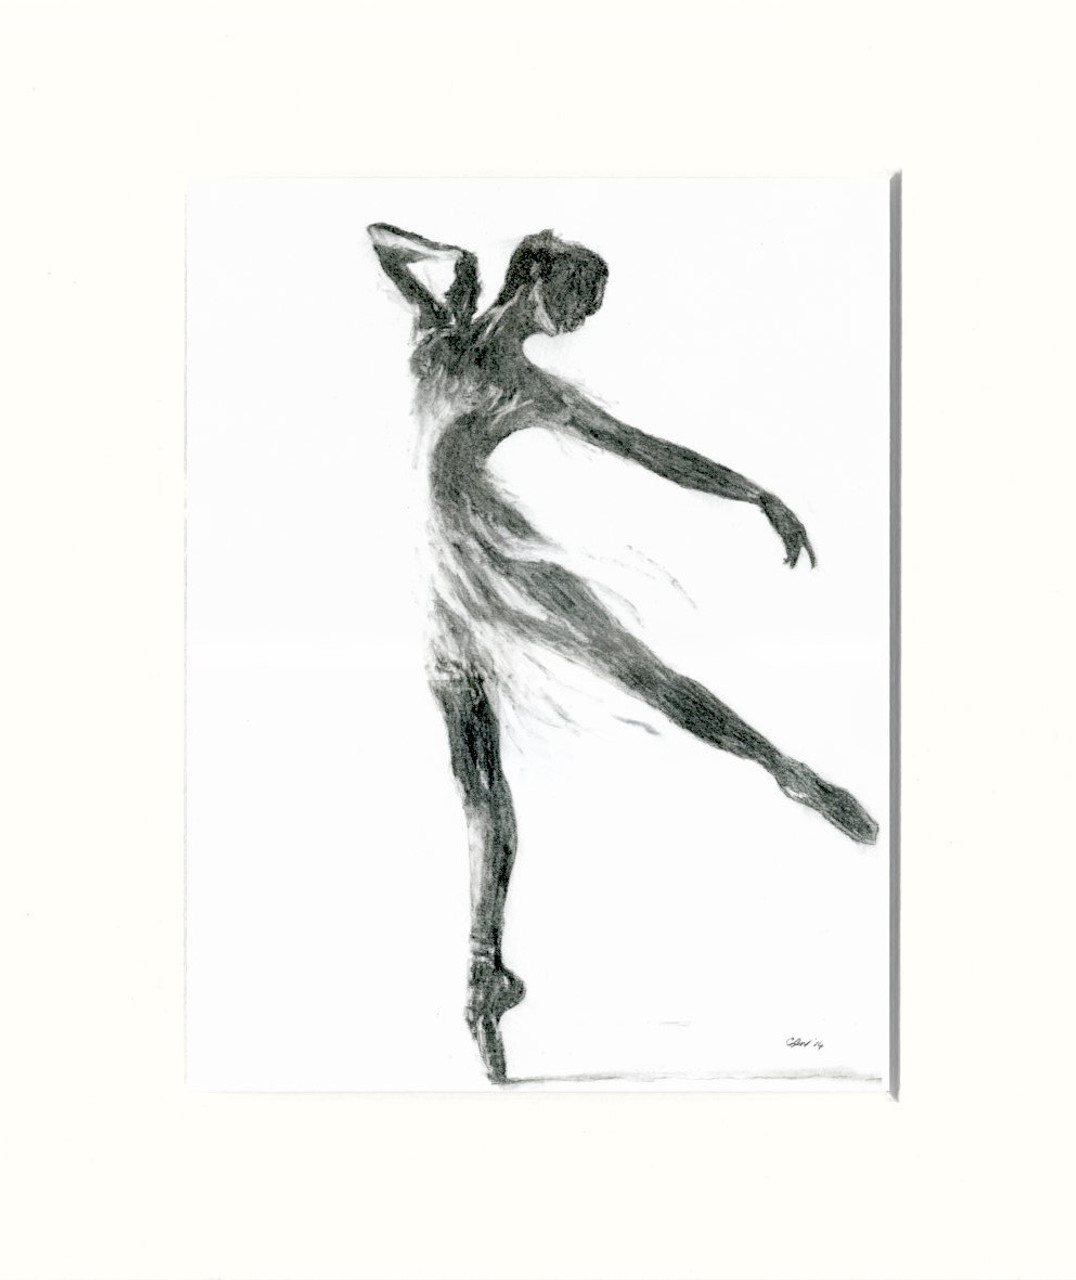 Ballerina Study in 1 Print - Willow Arts